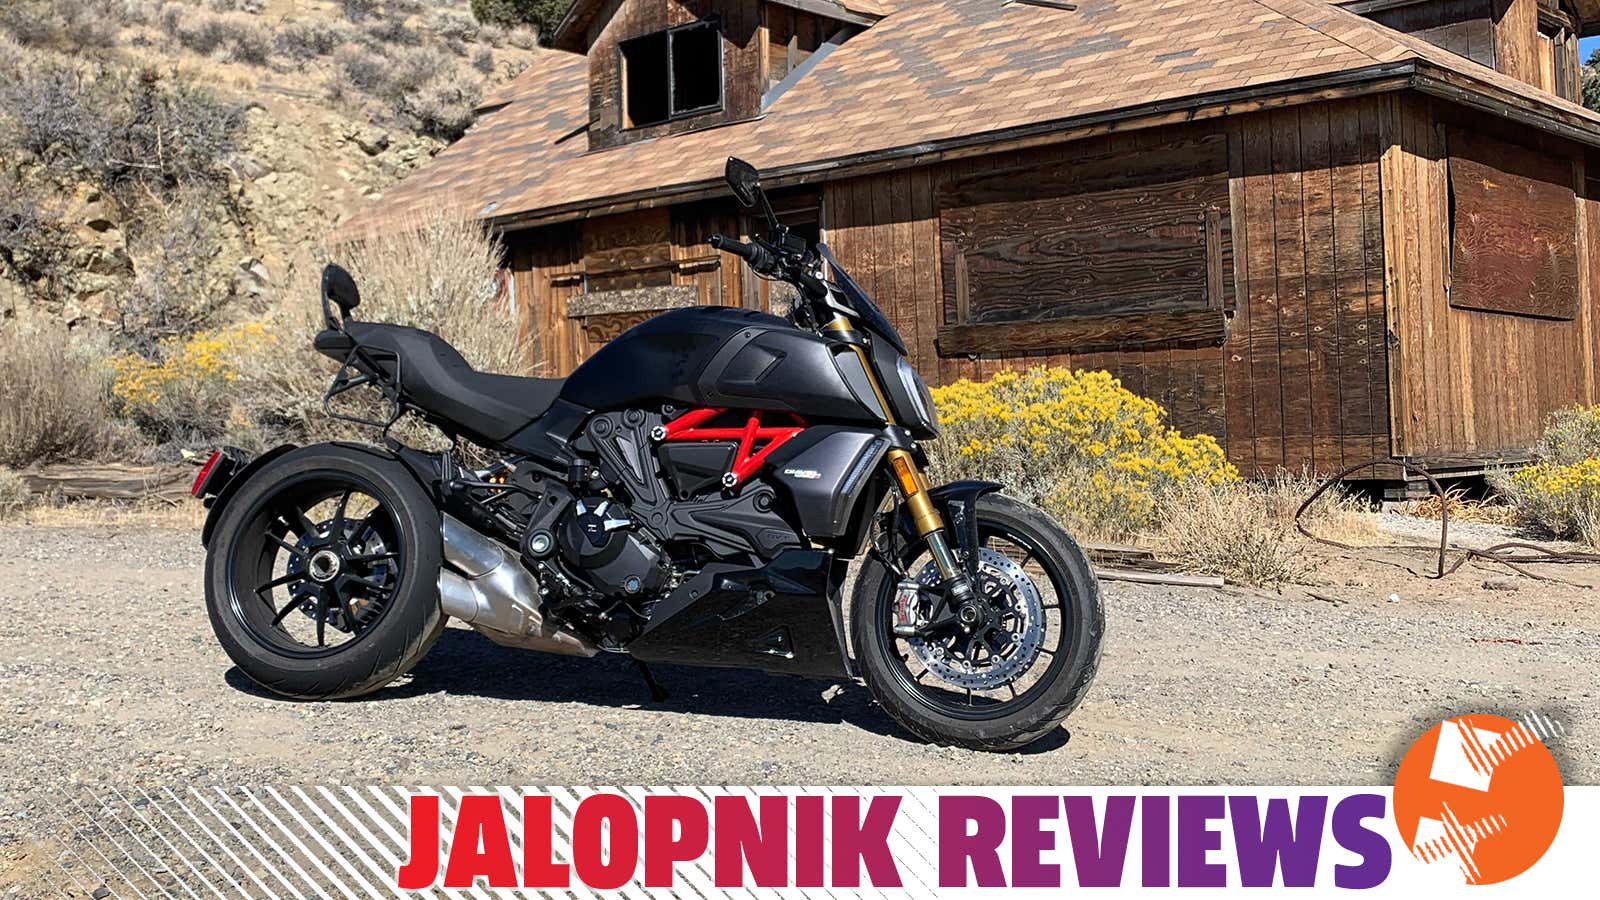 2020 Ducati Diavel 1260 S: The Jalopnik Review